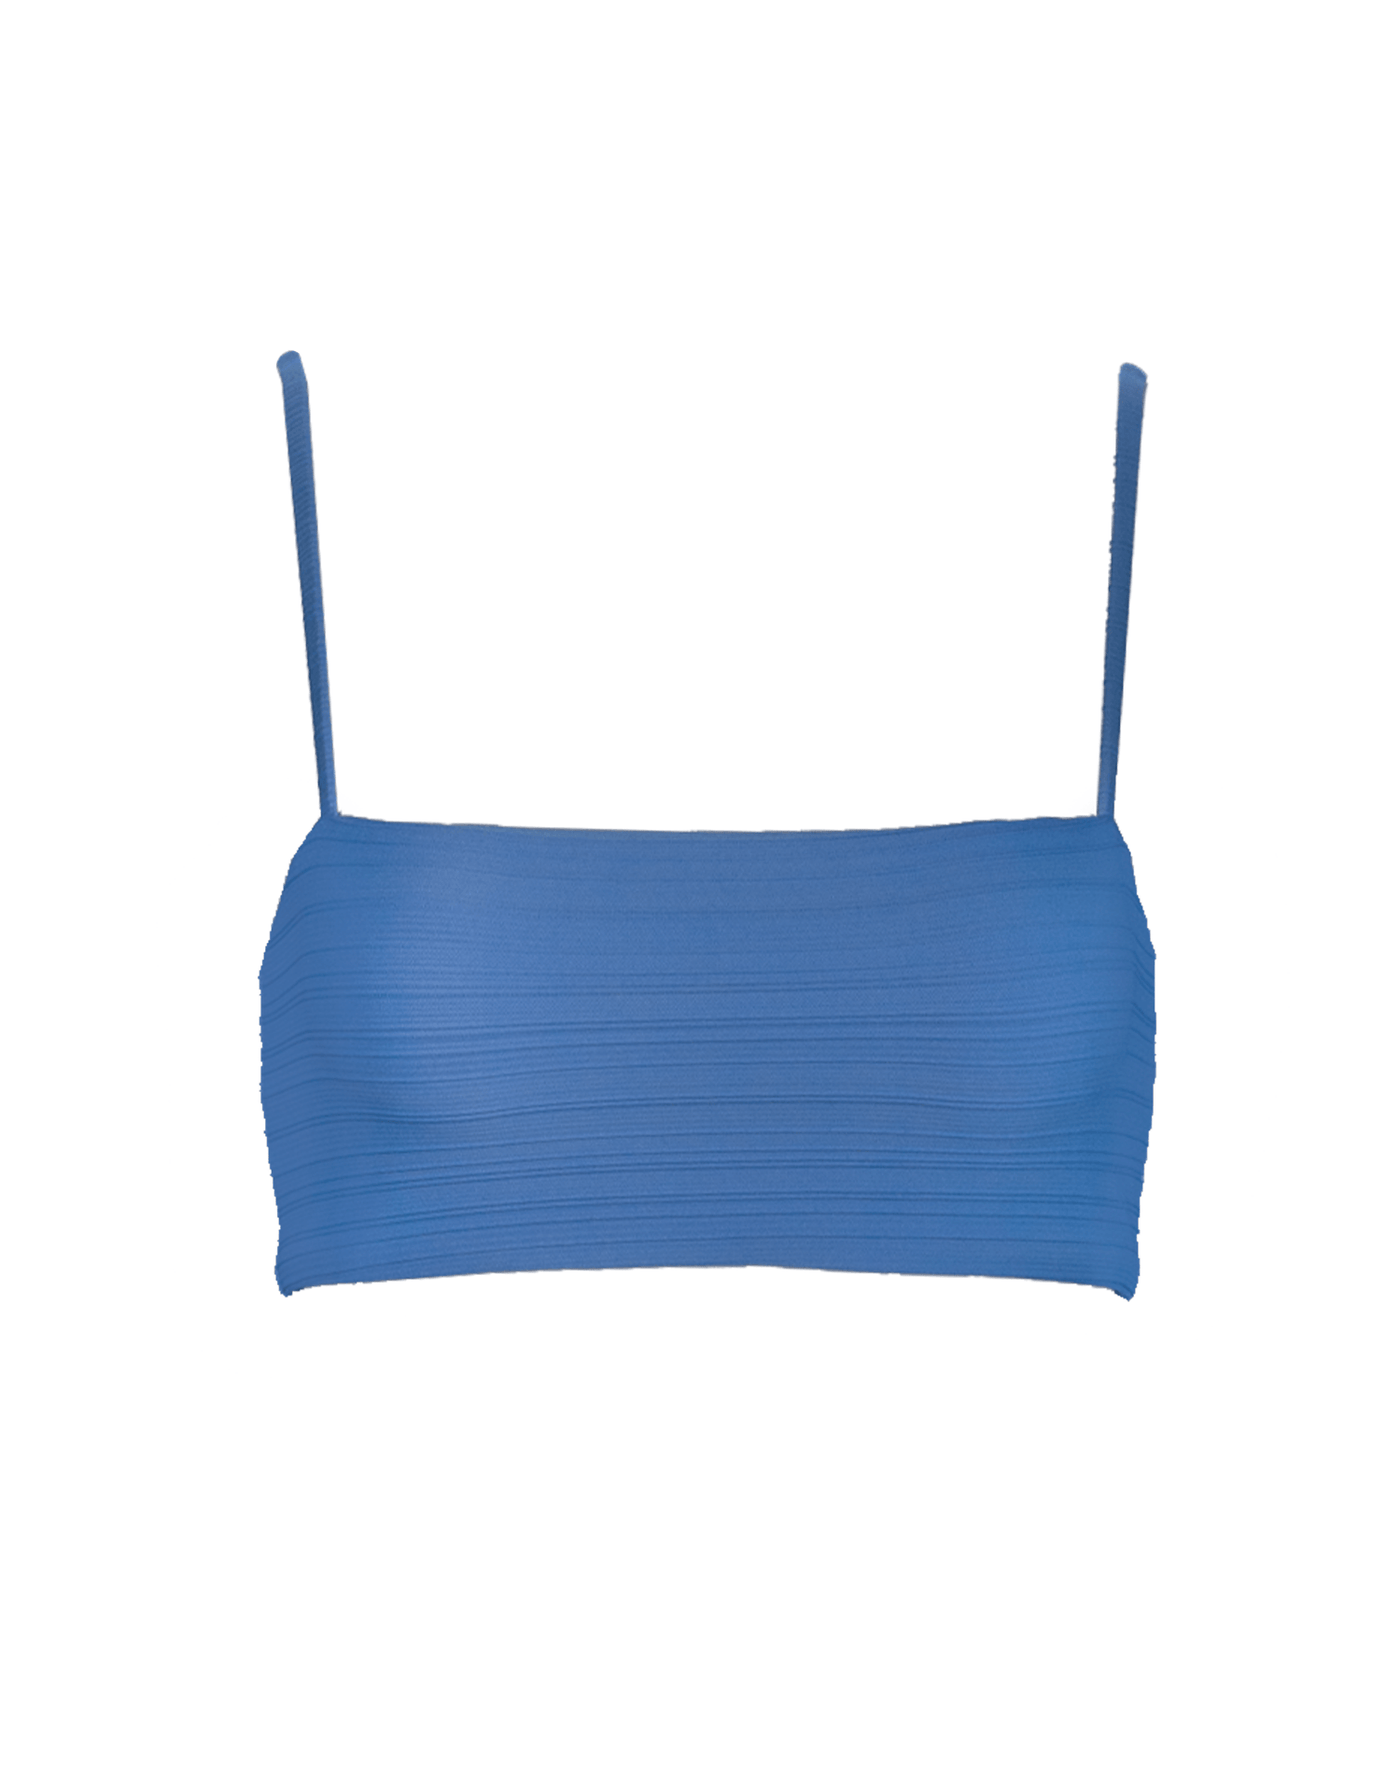 Norite Swim Top (Blue) - Blue Bikini Top - Women's Swim - Charcoal Clothing mix-and-match